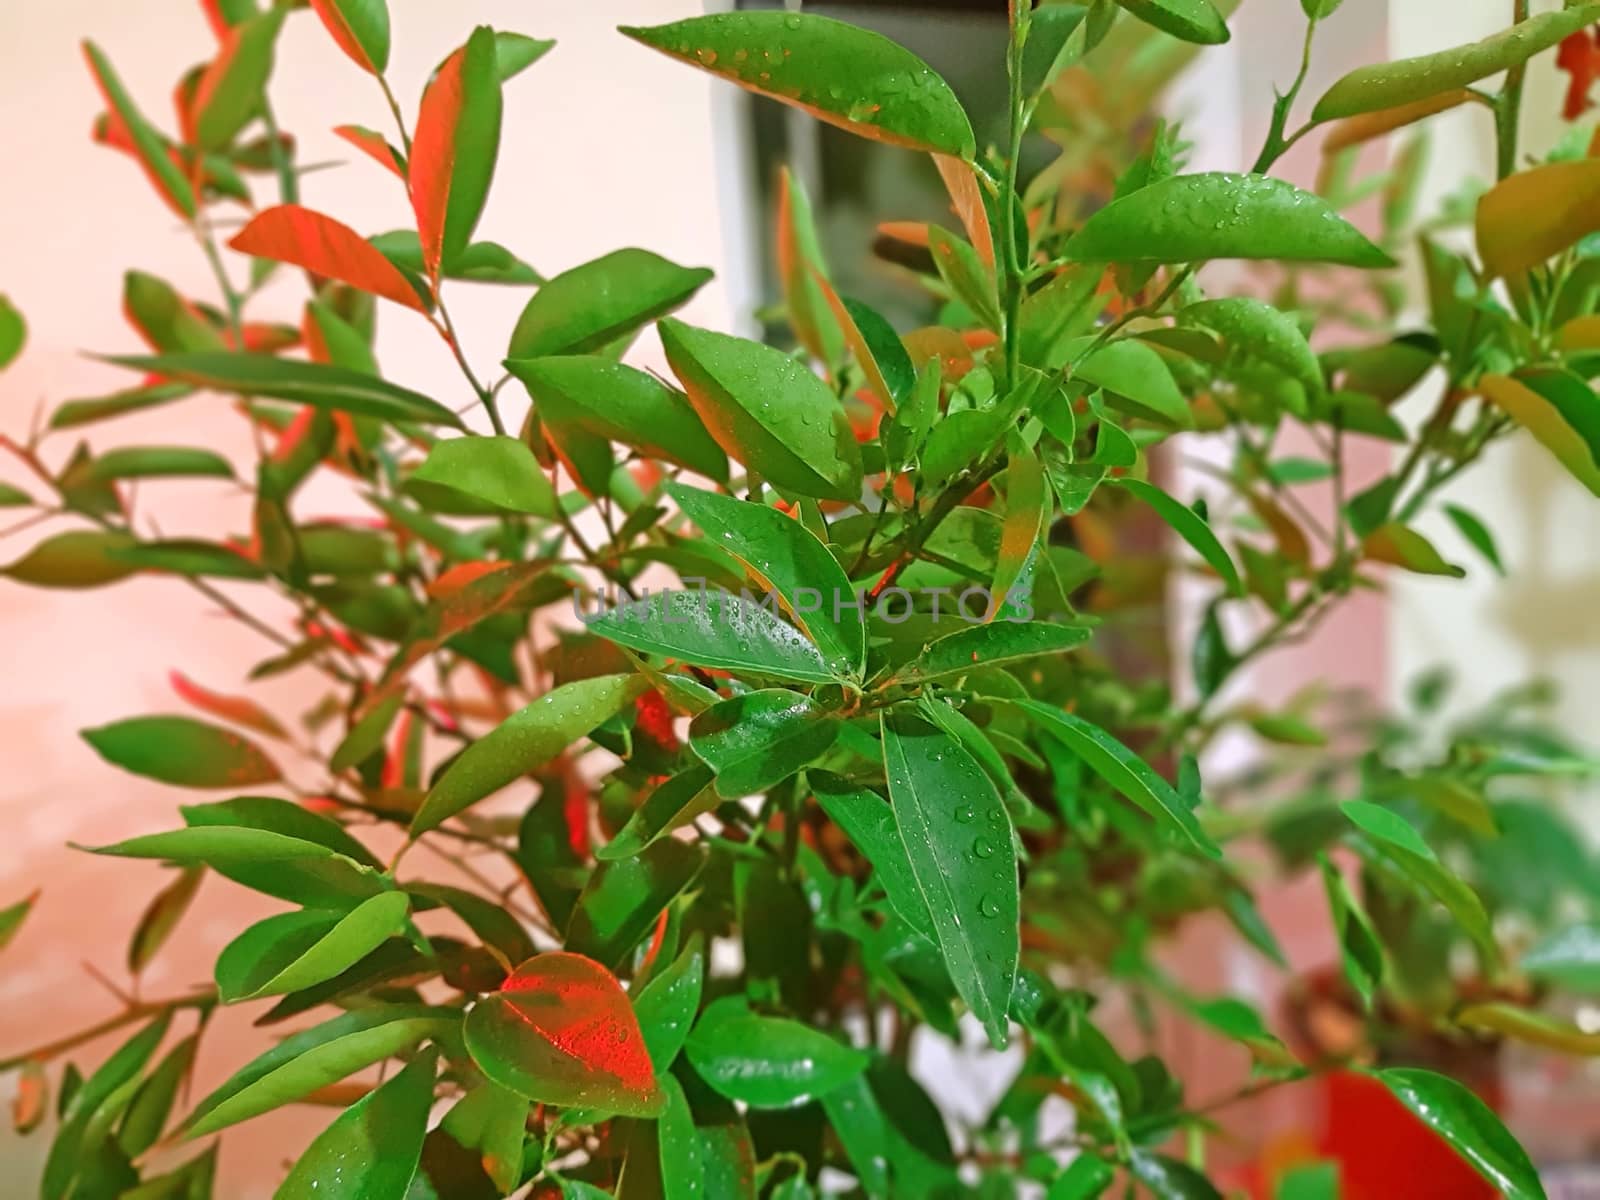 Grow light on the Tangerine tree indoor by Mindru